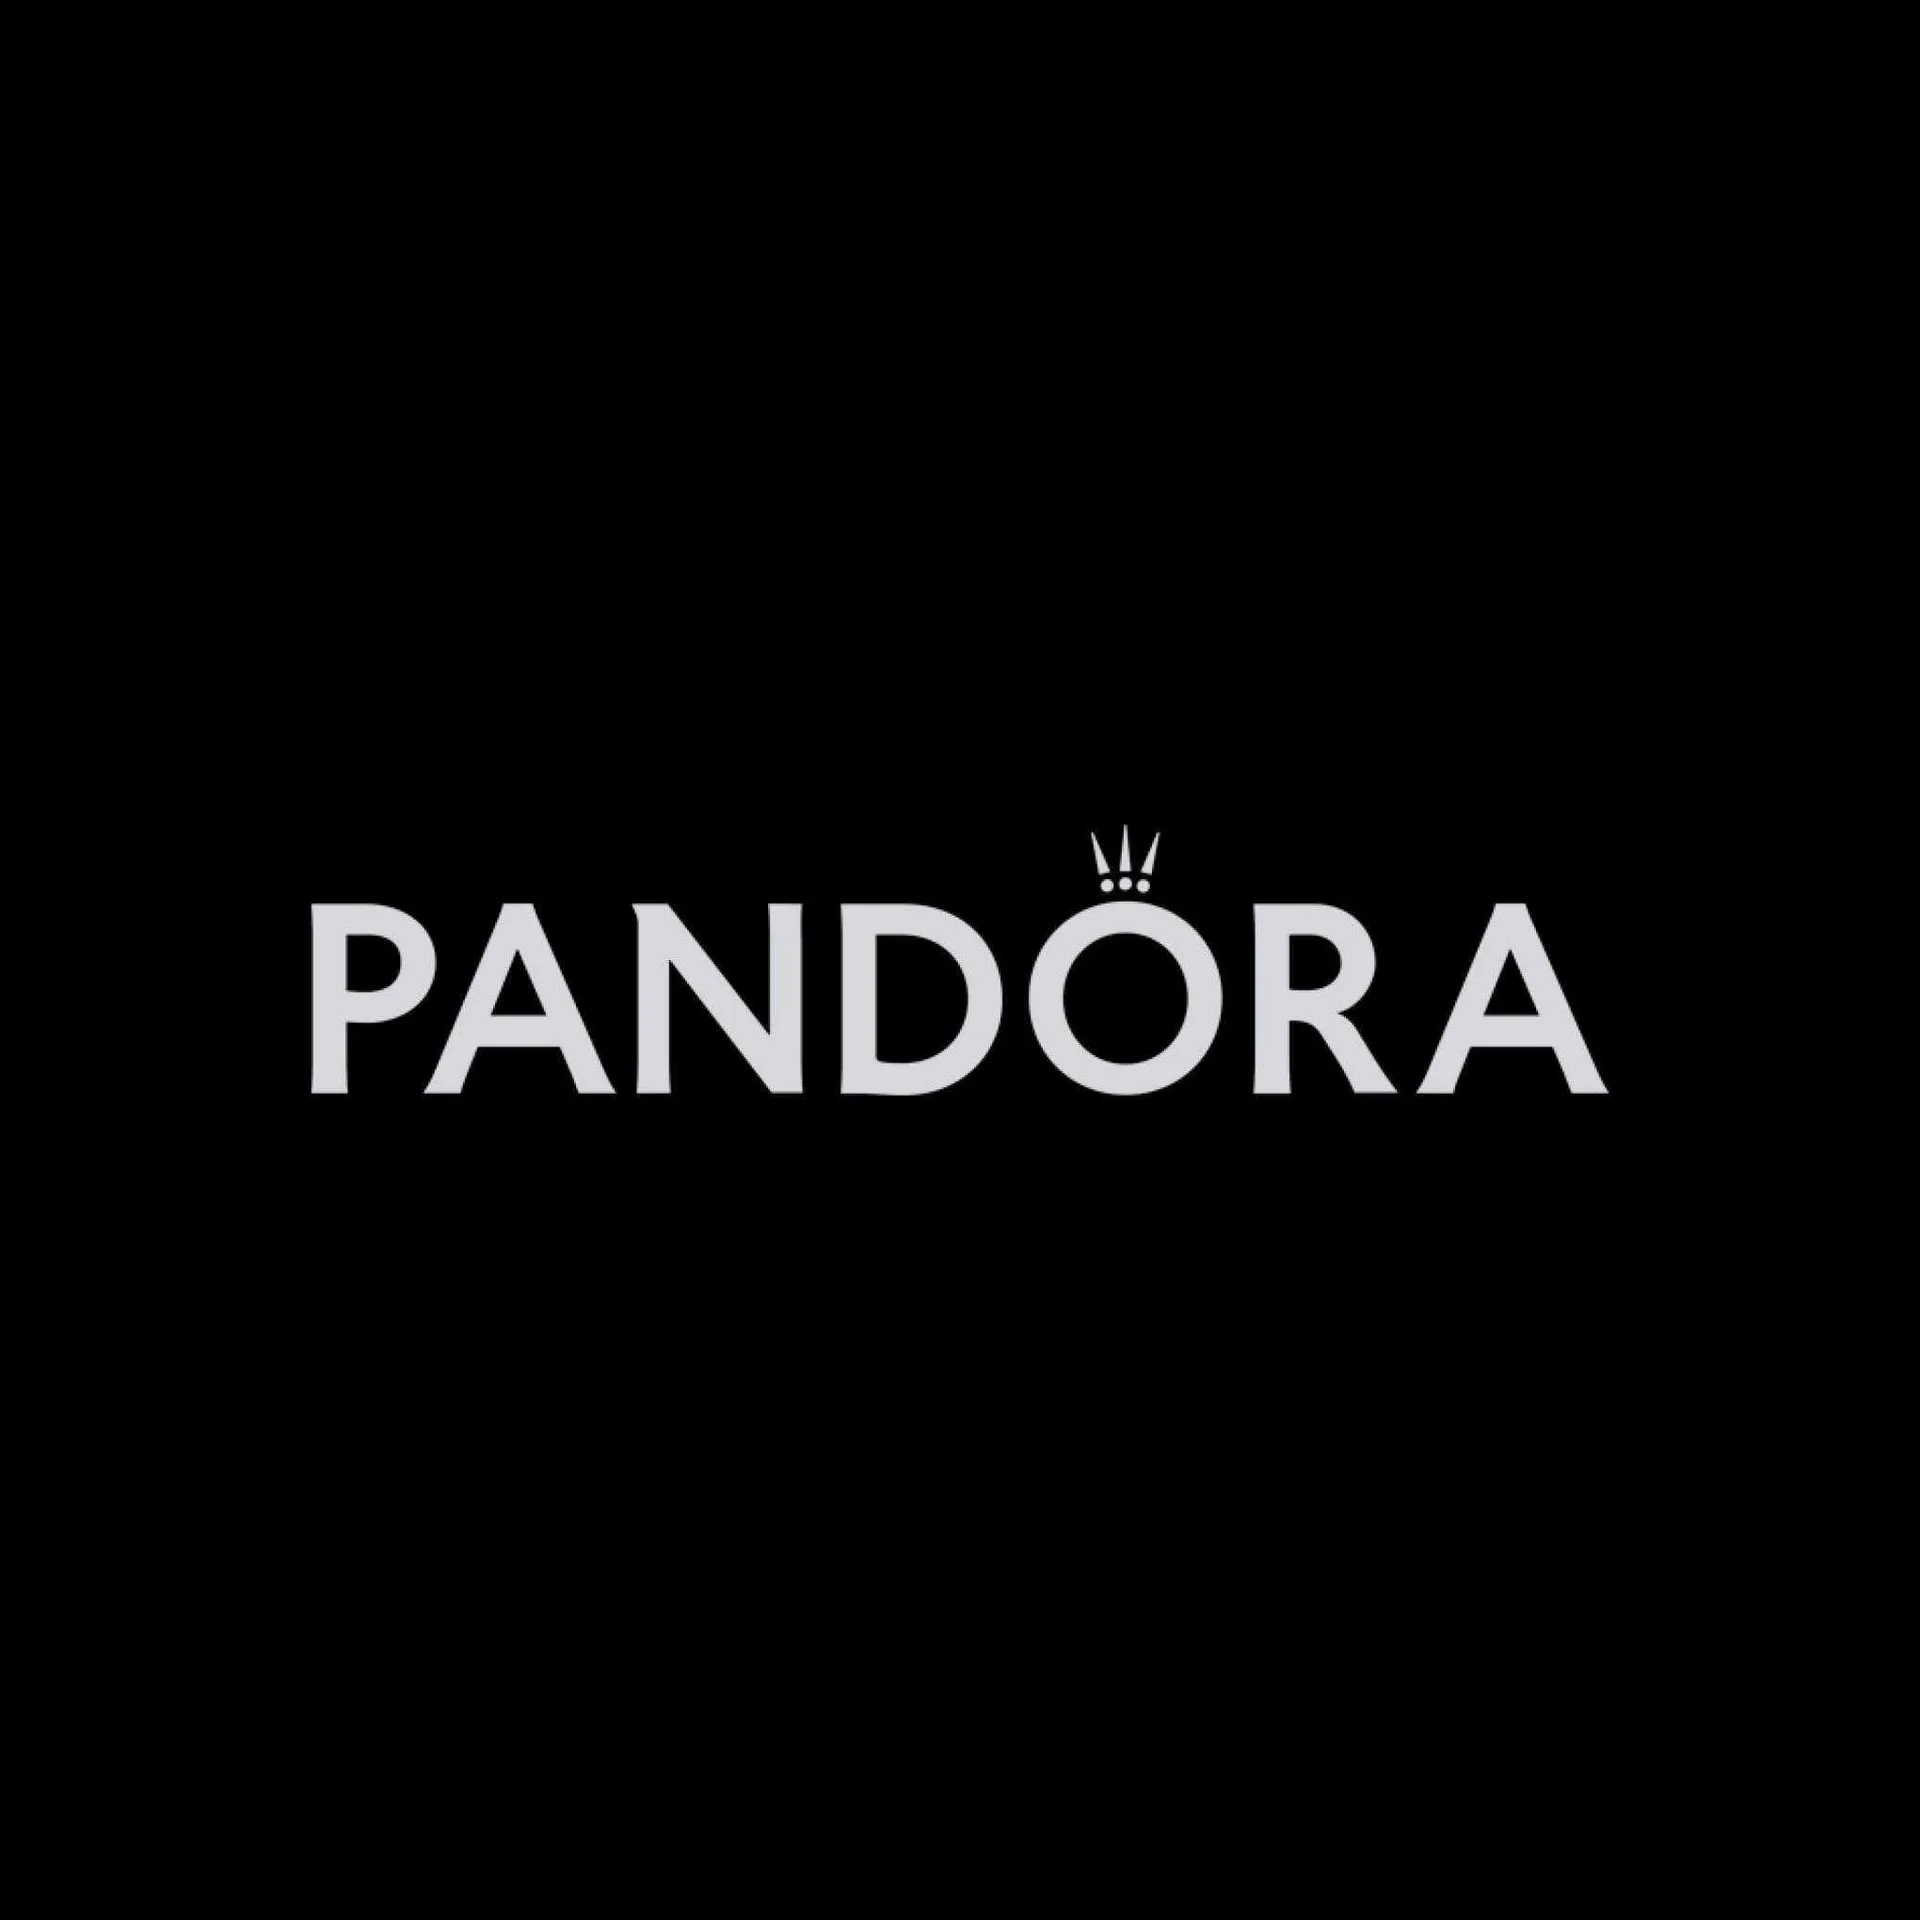 Pandora Weekly Offers - 12